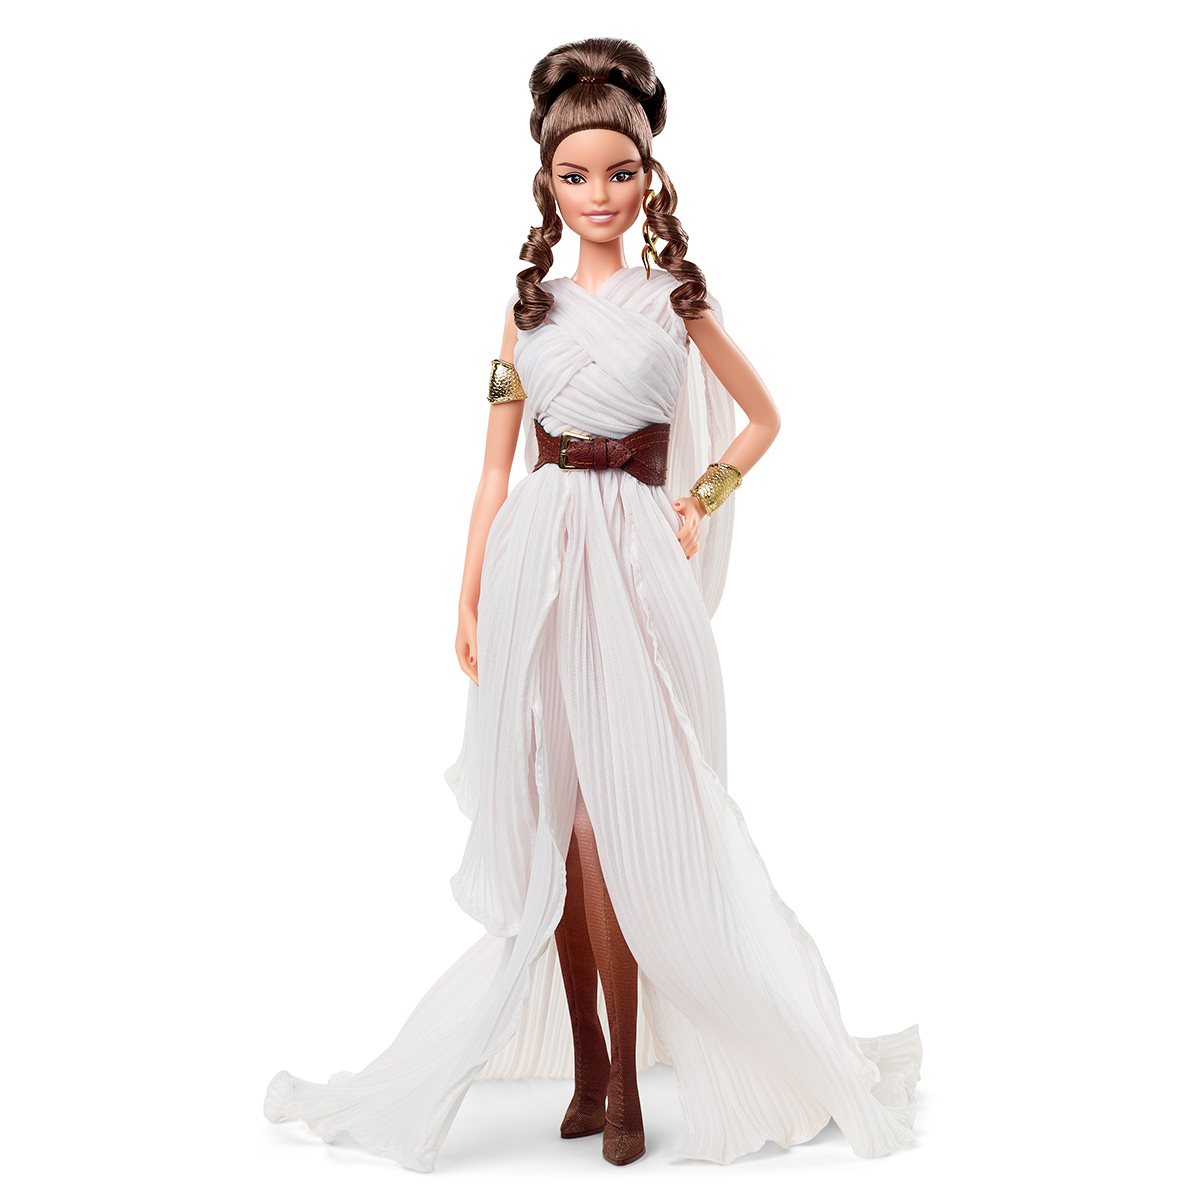 Star Wars Barbie Rey Doll - Entertainment